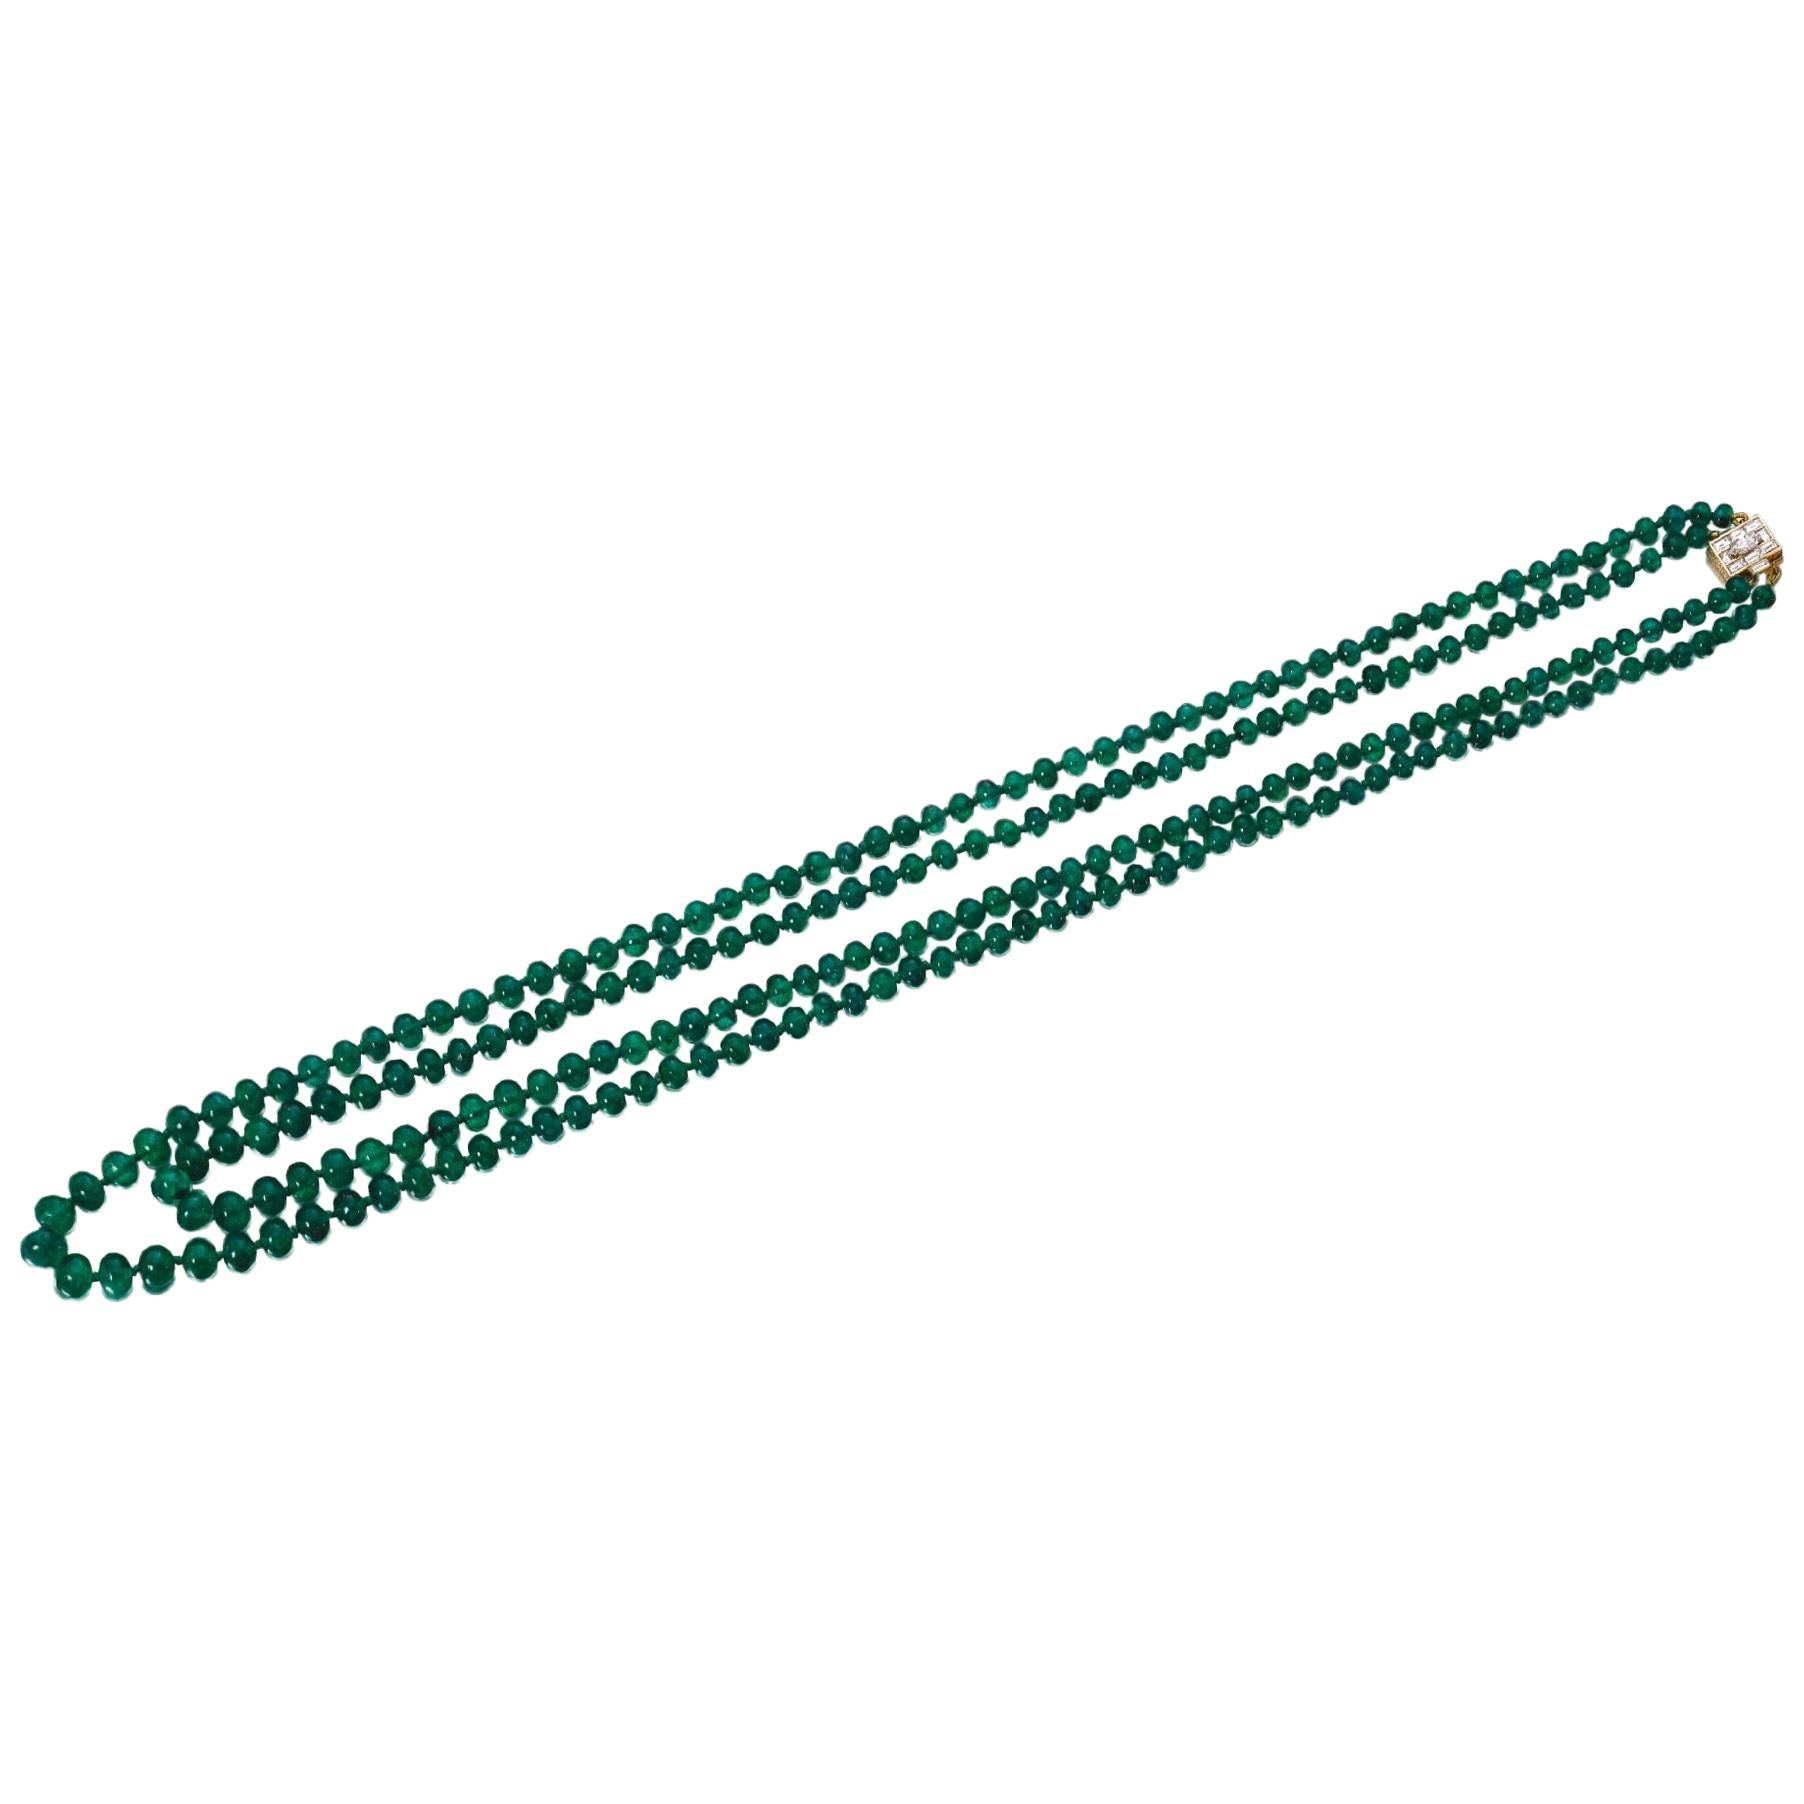 Bulgari Emerald Bead Double Strand Necklace